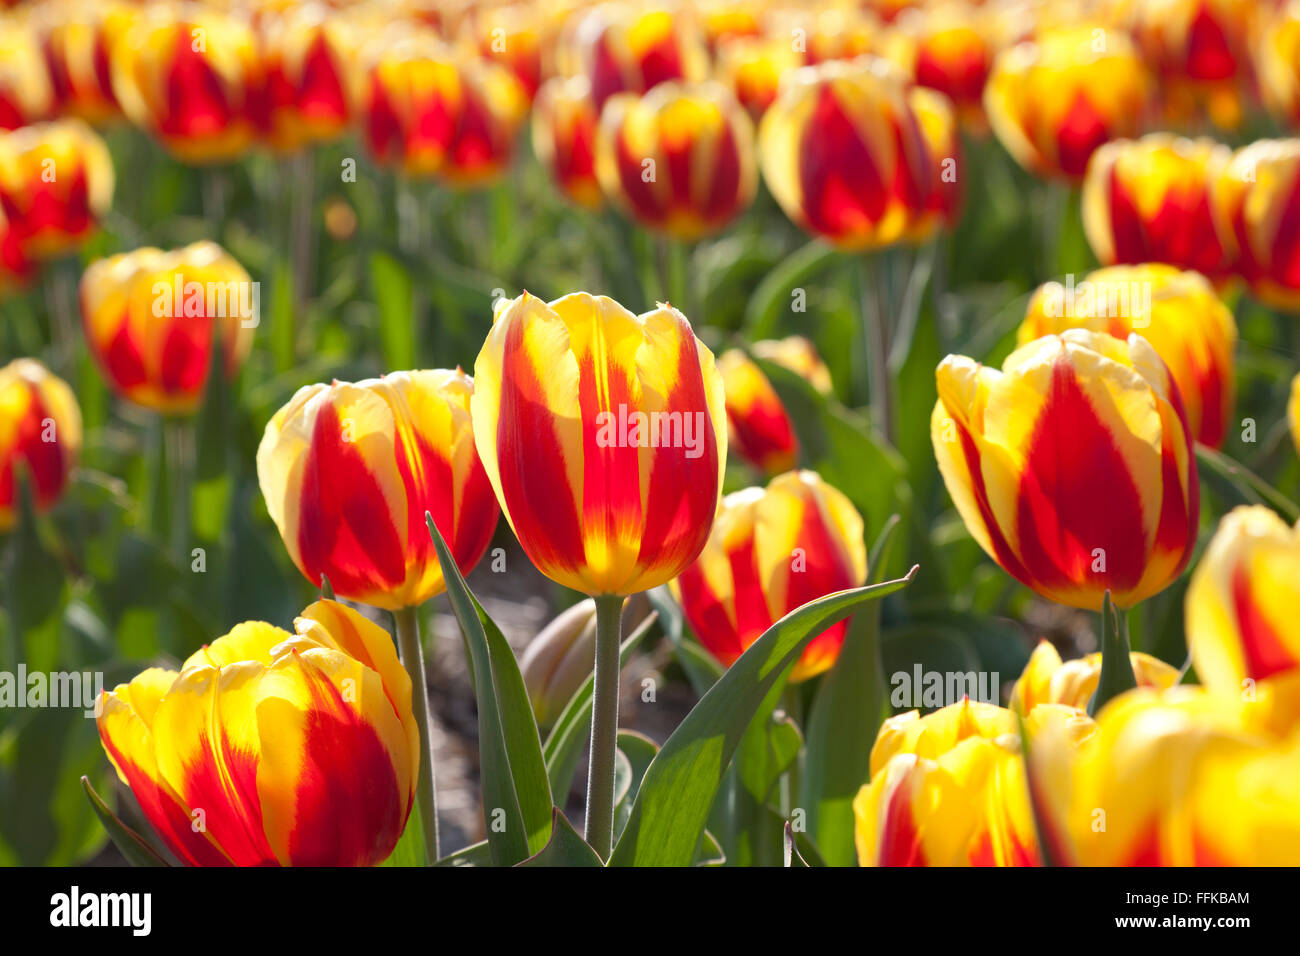 Dutch Tulip fields in springtime Stock Photo